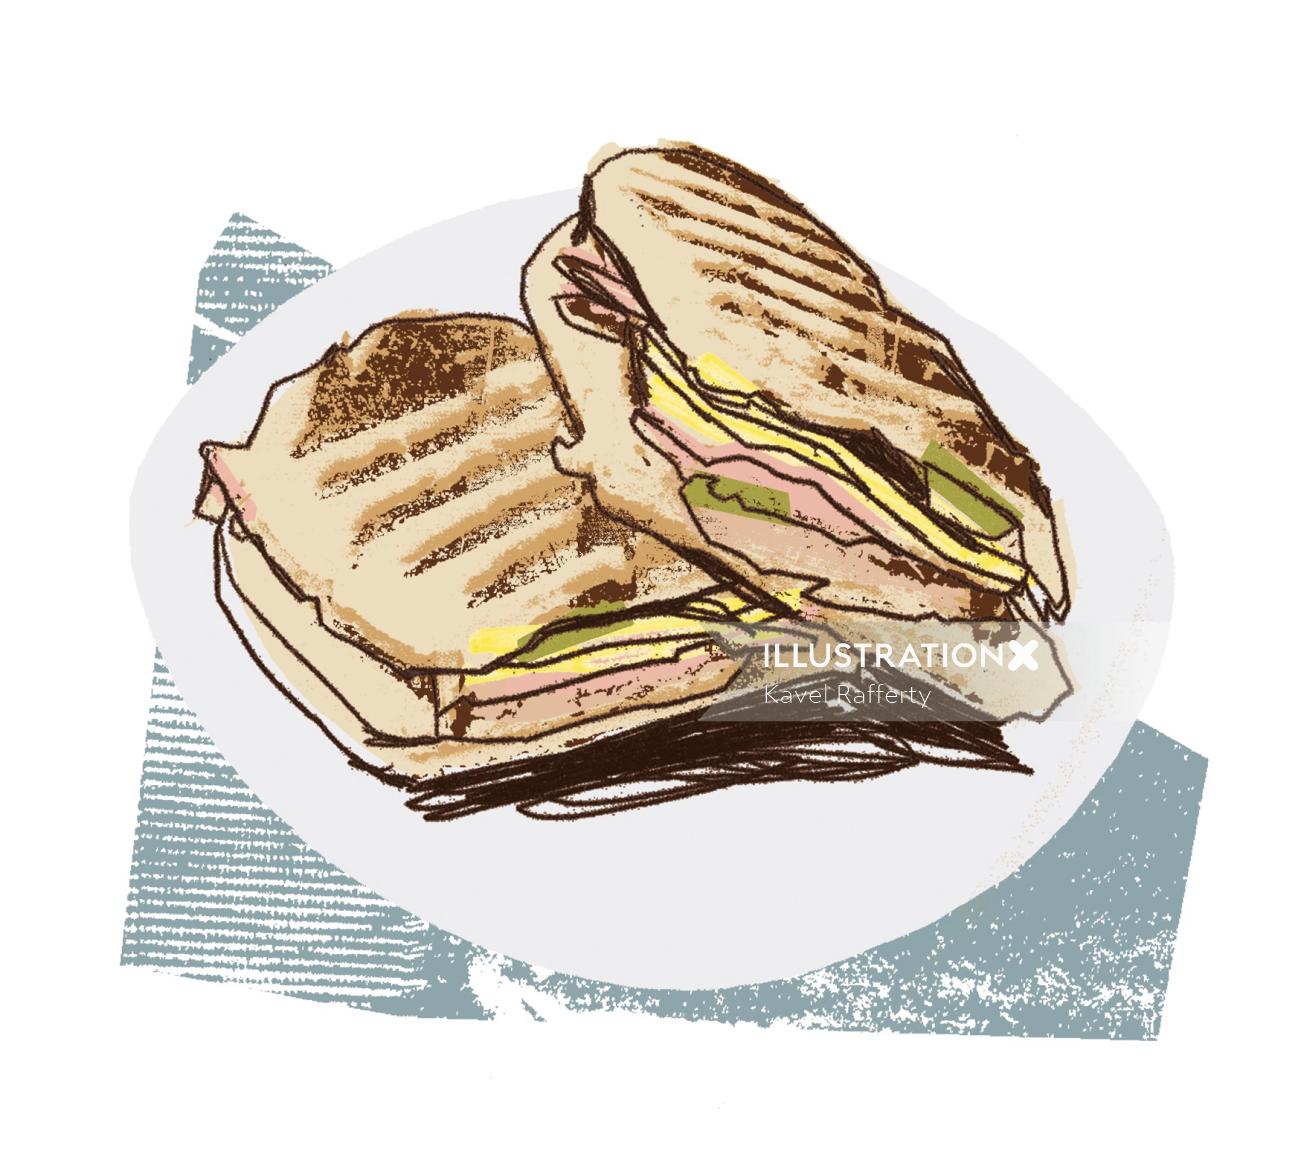 Panini Sandwich food illustration